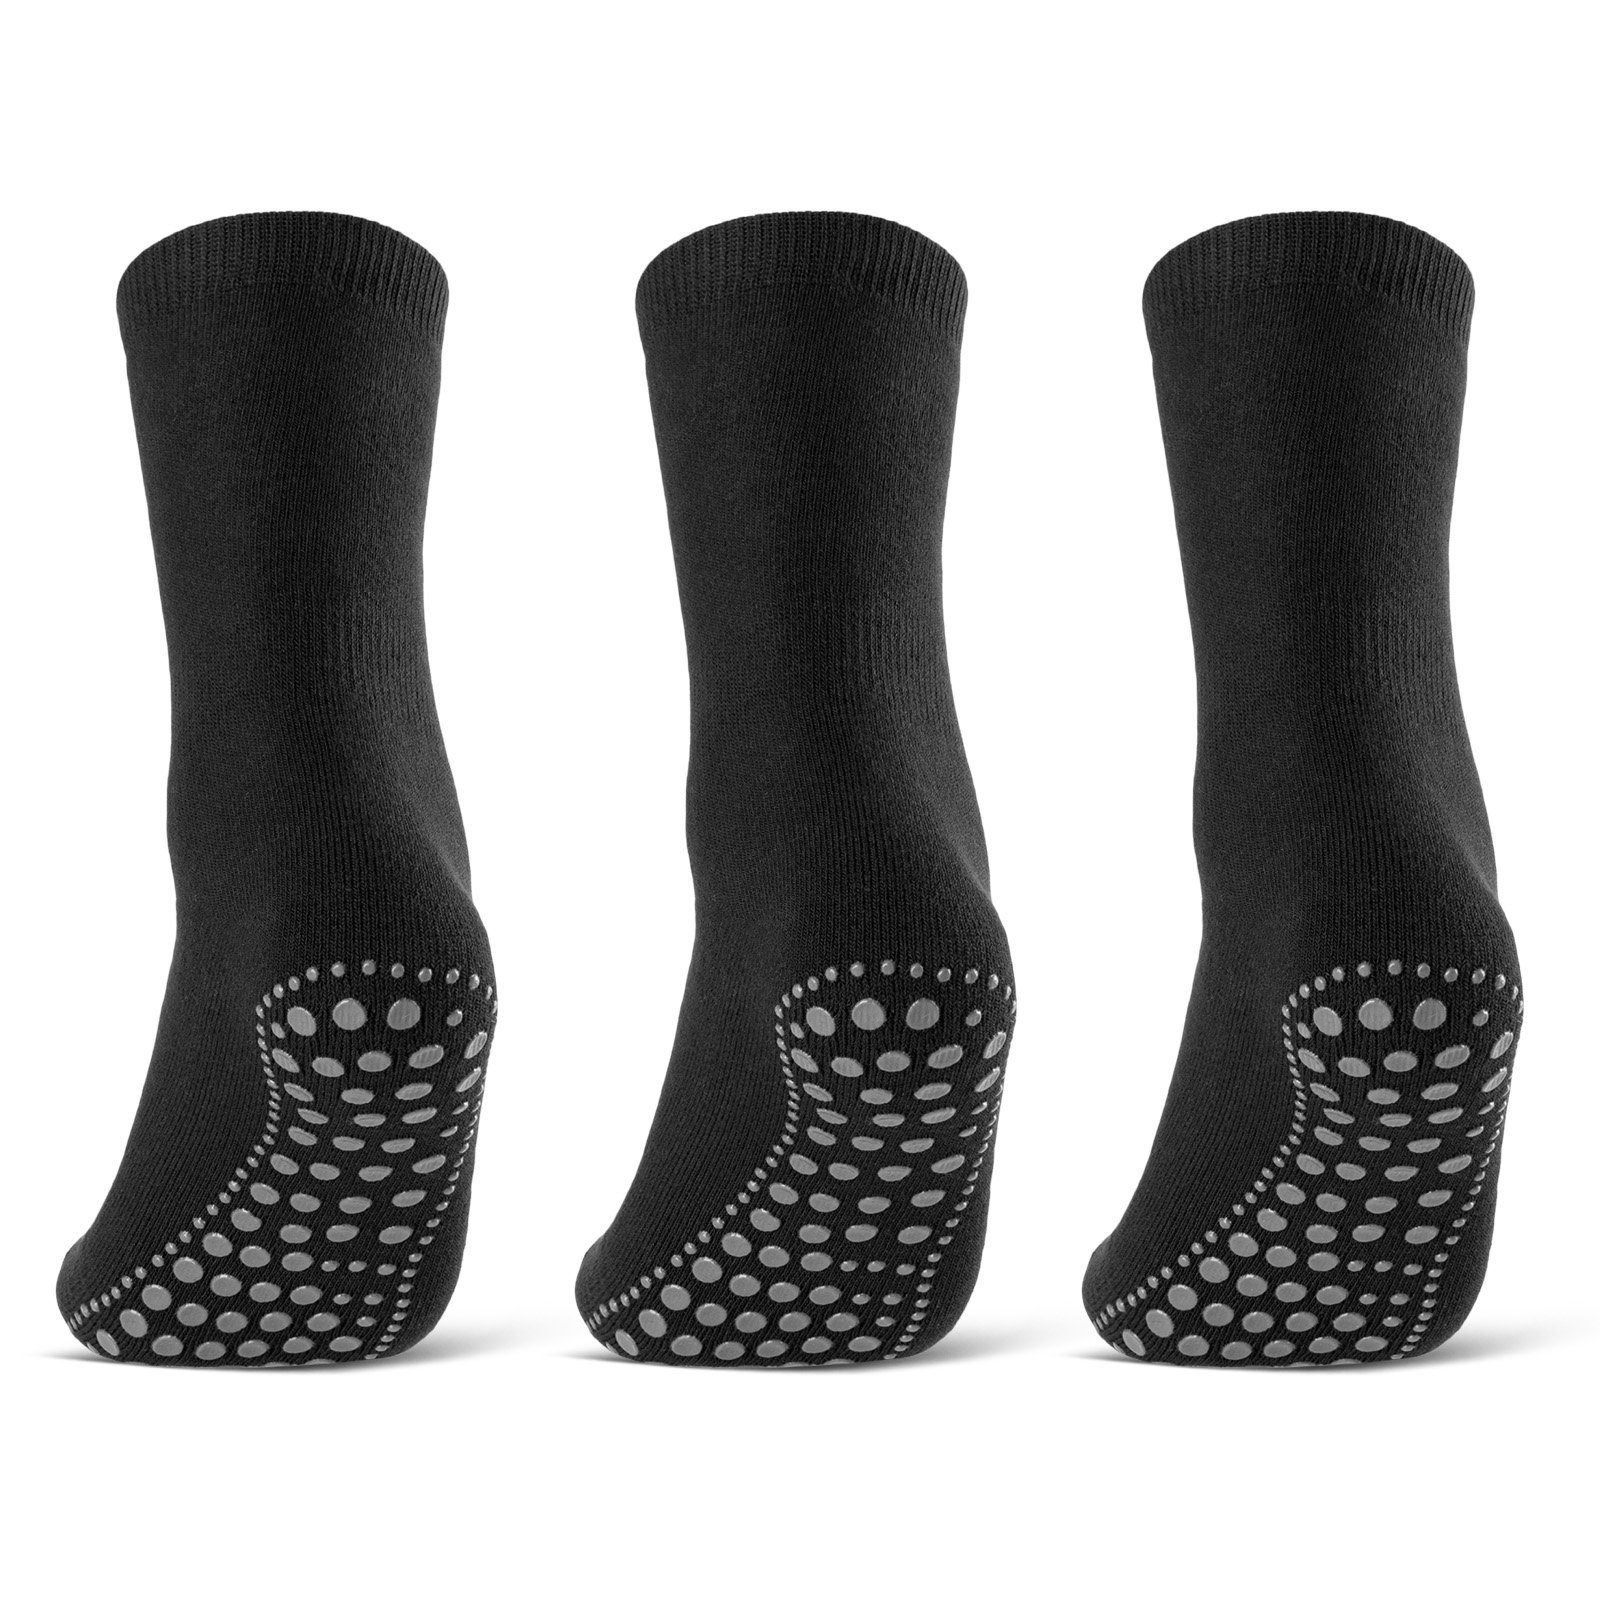 sockenkauf24 ABS-Socken 3 oder 6 Paar "Premium" Anti Rutsch Socken Damen Herren (Schwarz, 3-Paar, 39-42) ABS Socken Noppen Stoppersocken - 8600 WP